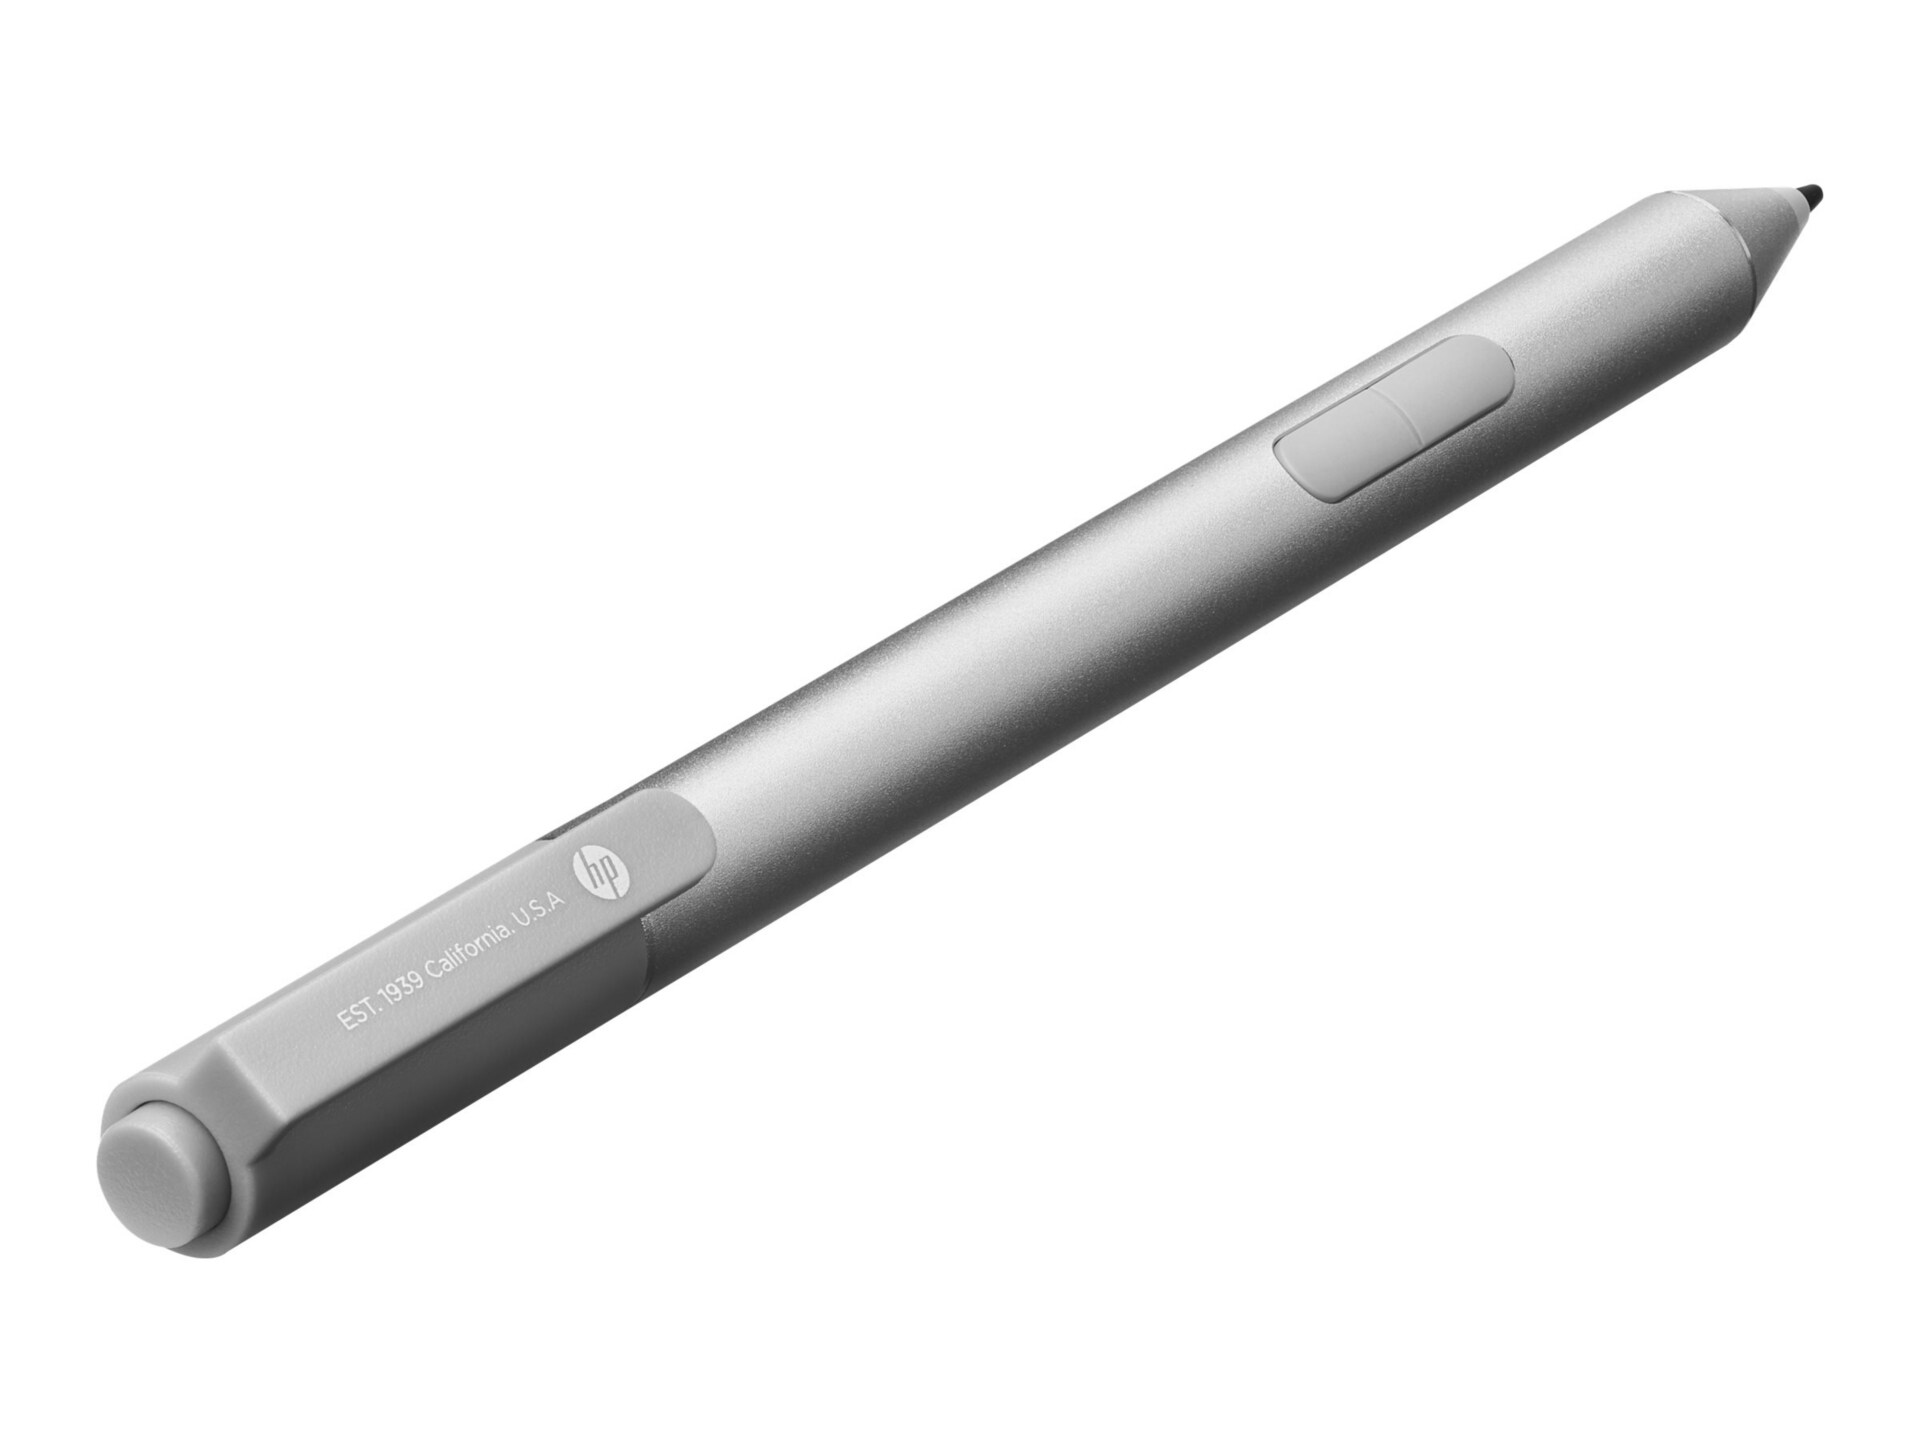 HP Active Pen with App Launch - digital pen - gray, silver - Smart Buy